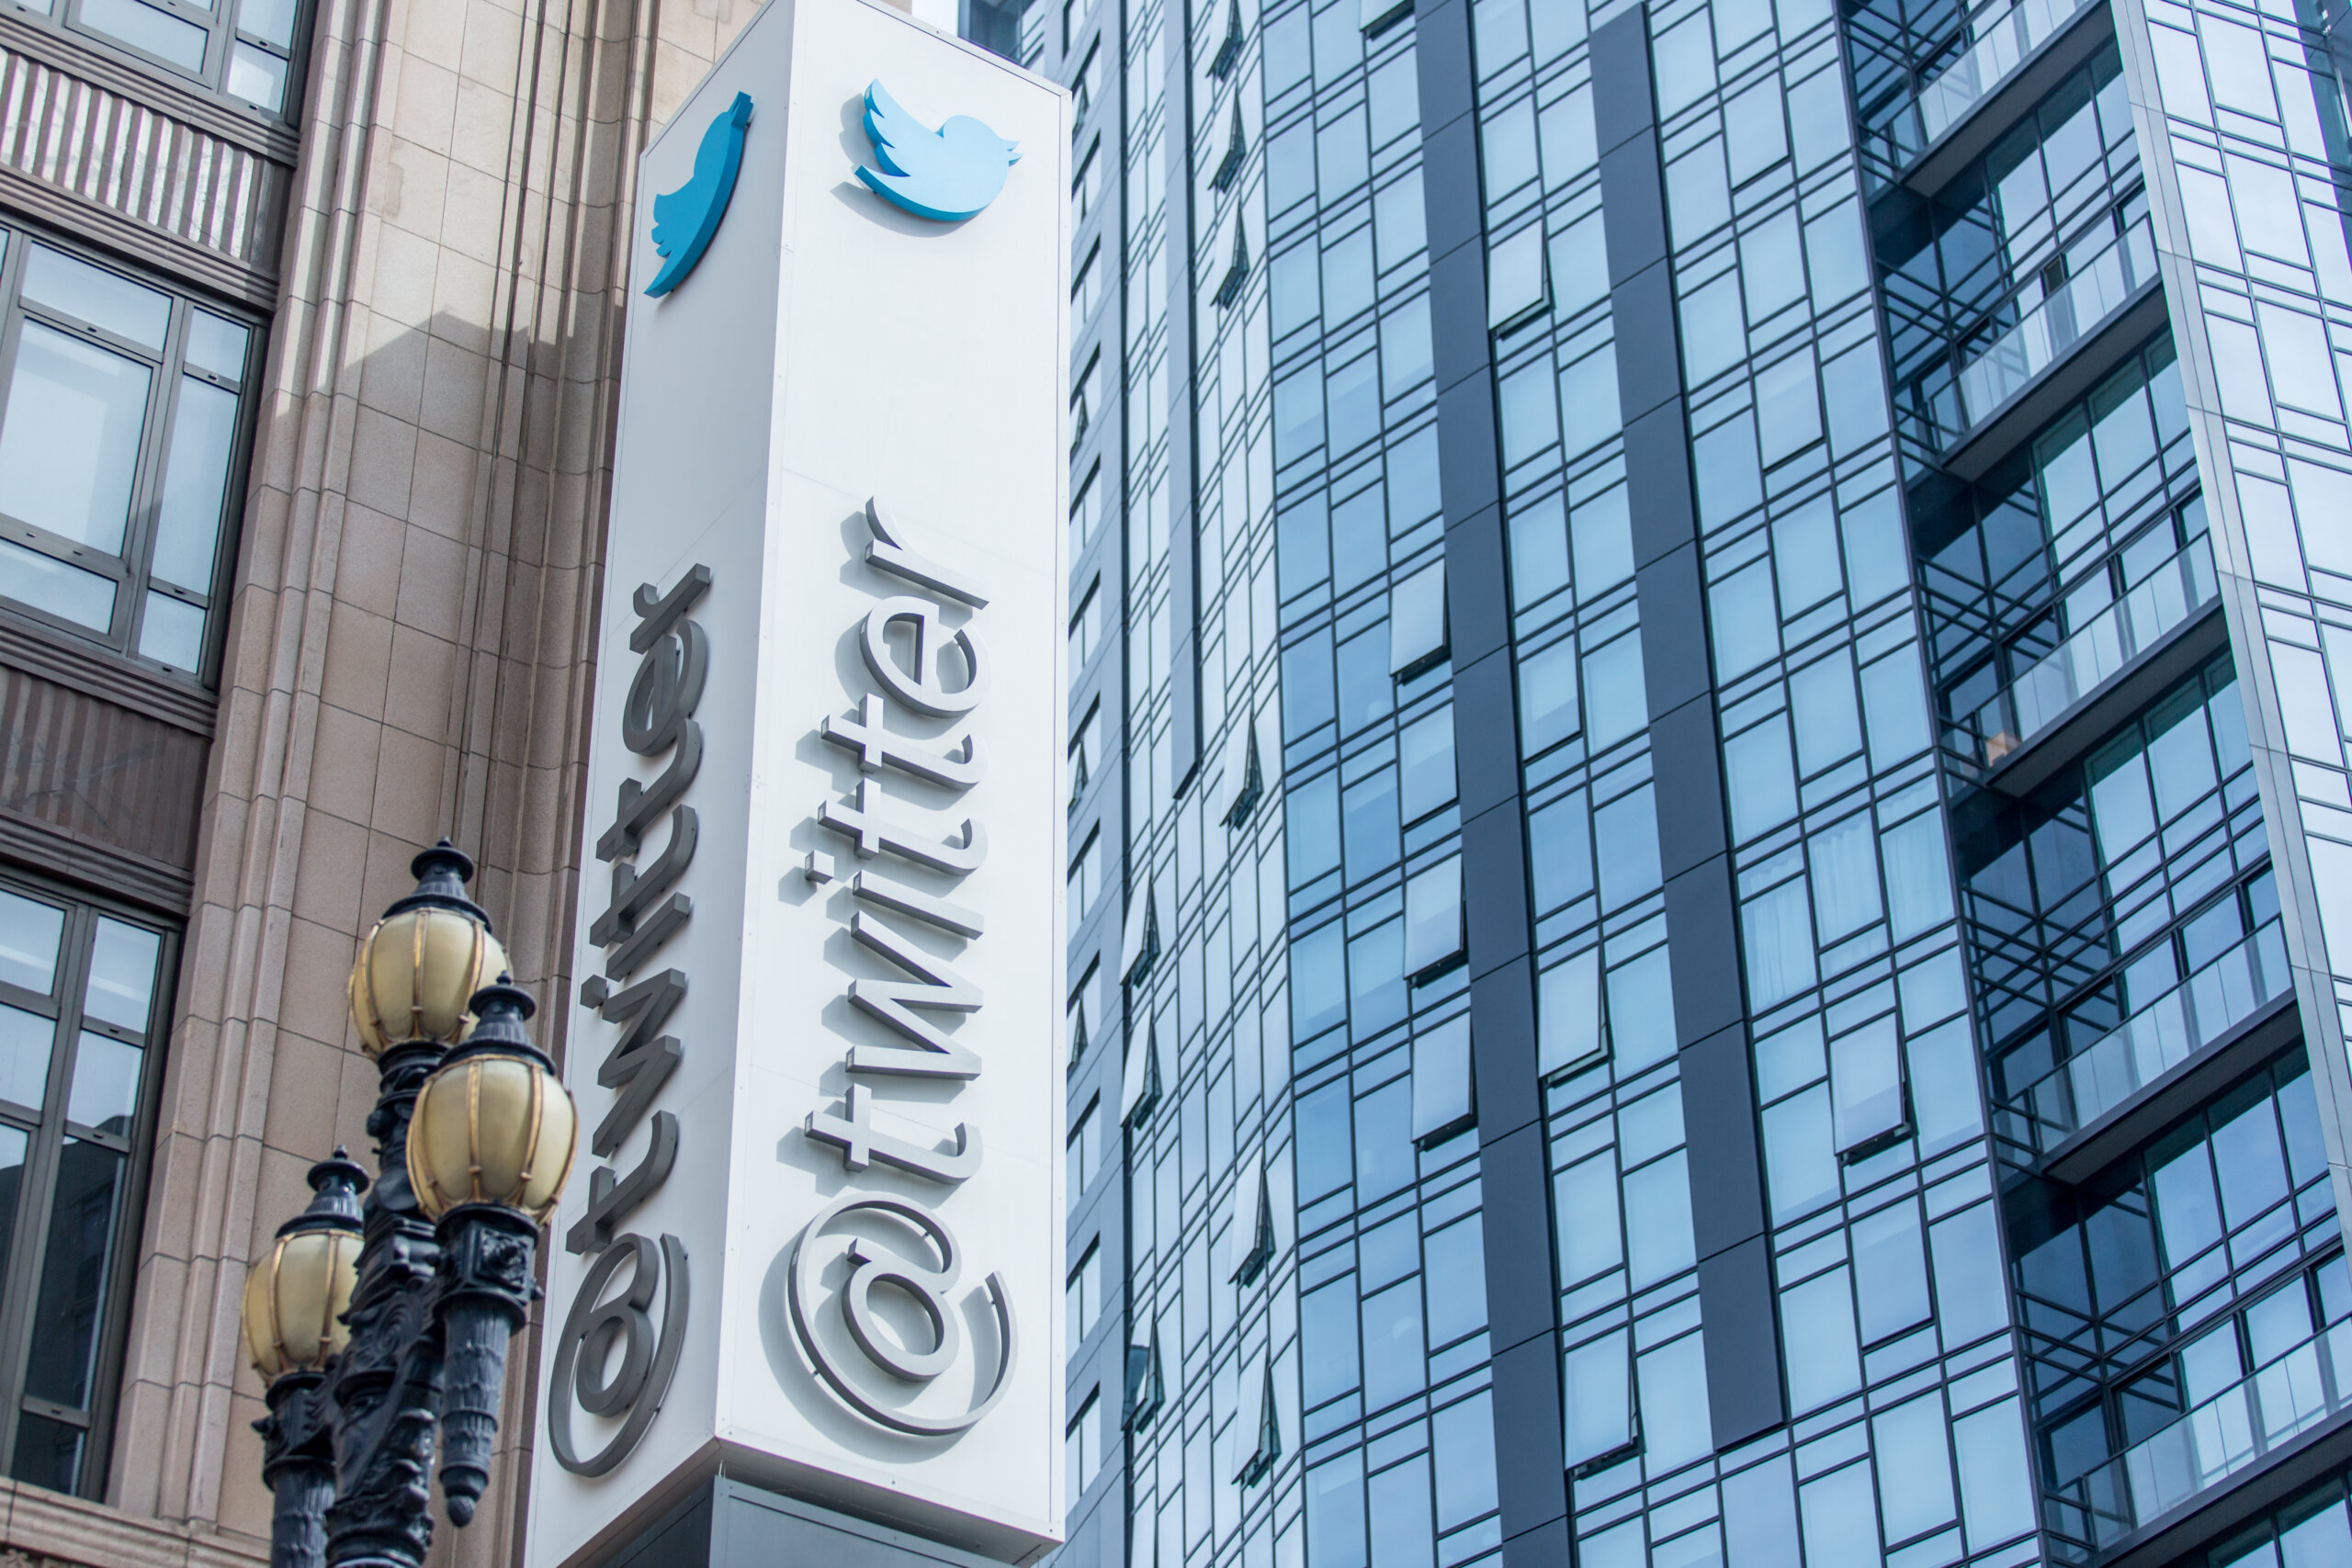 Twitter promises higher quality for new video uploads